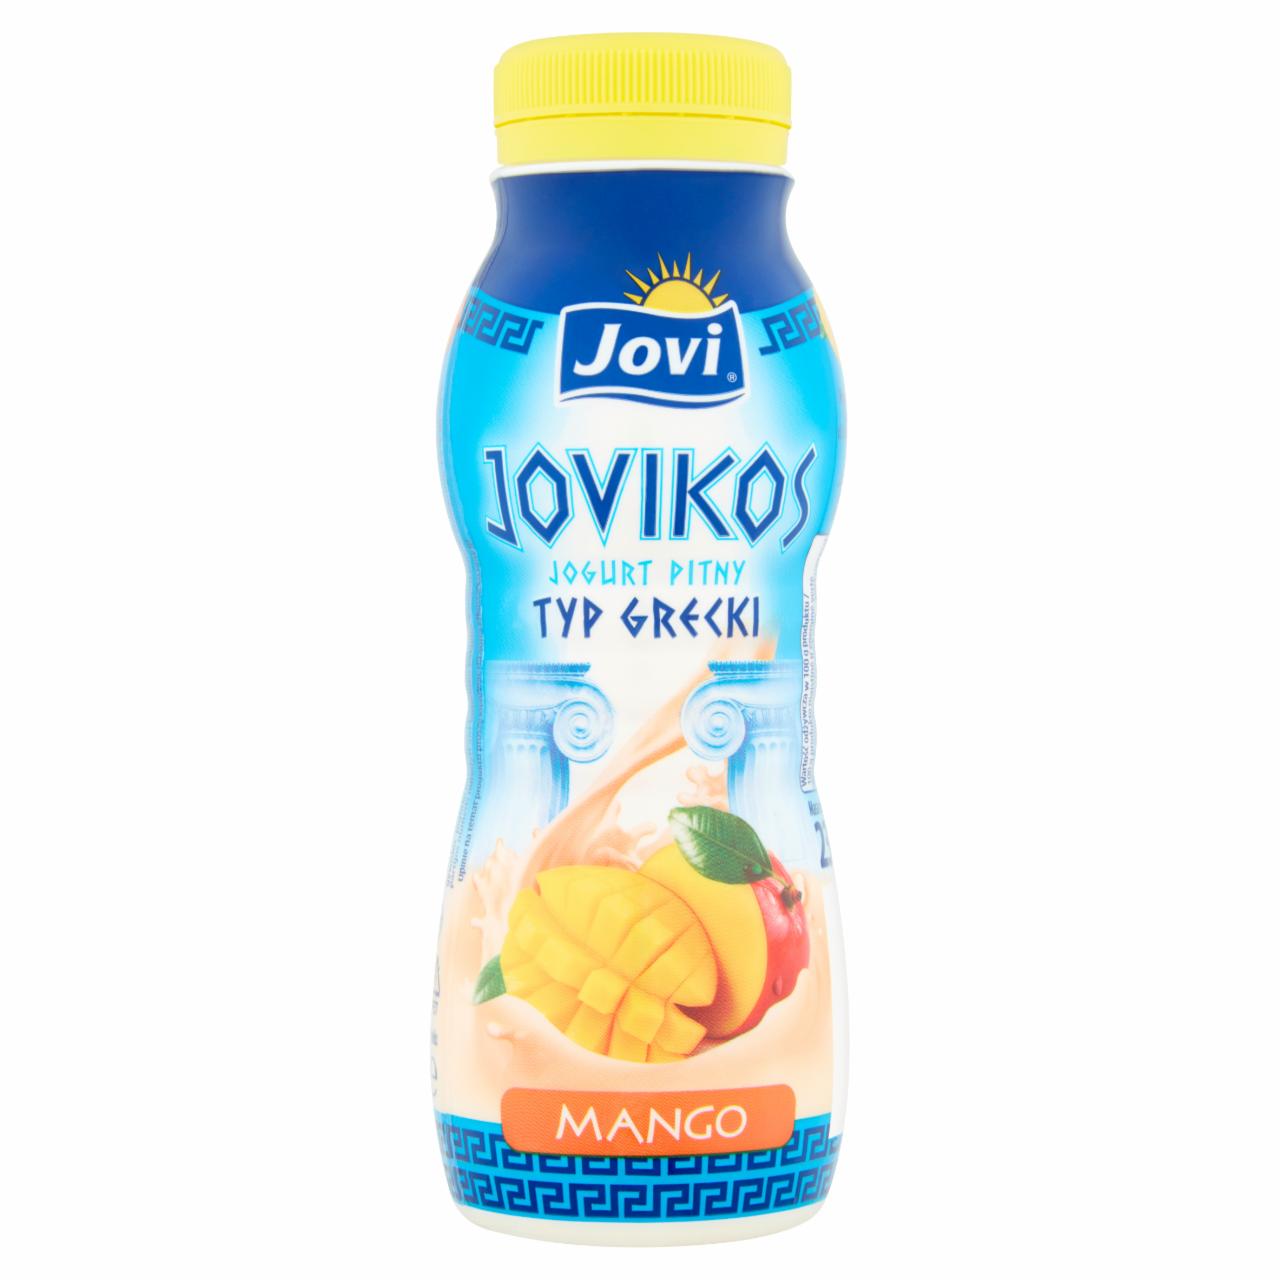 Zdjęcia - Jovi Jovikos Jogurt pitny typ grecki mango 230 g